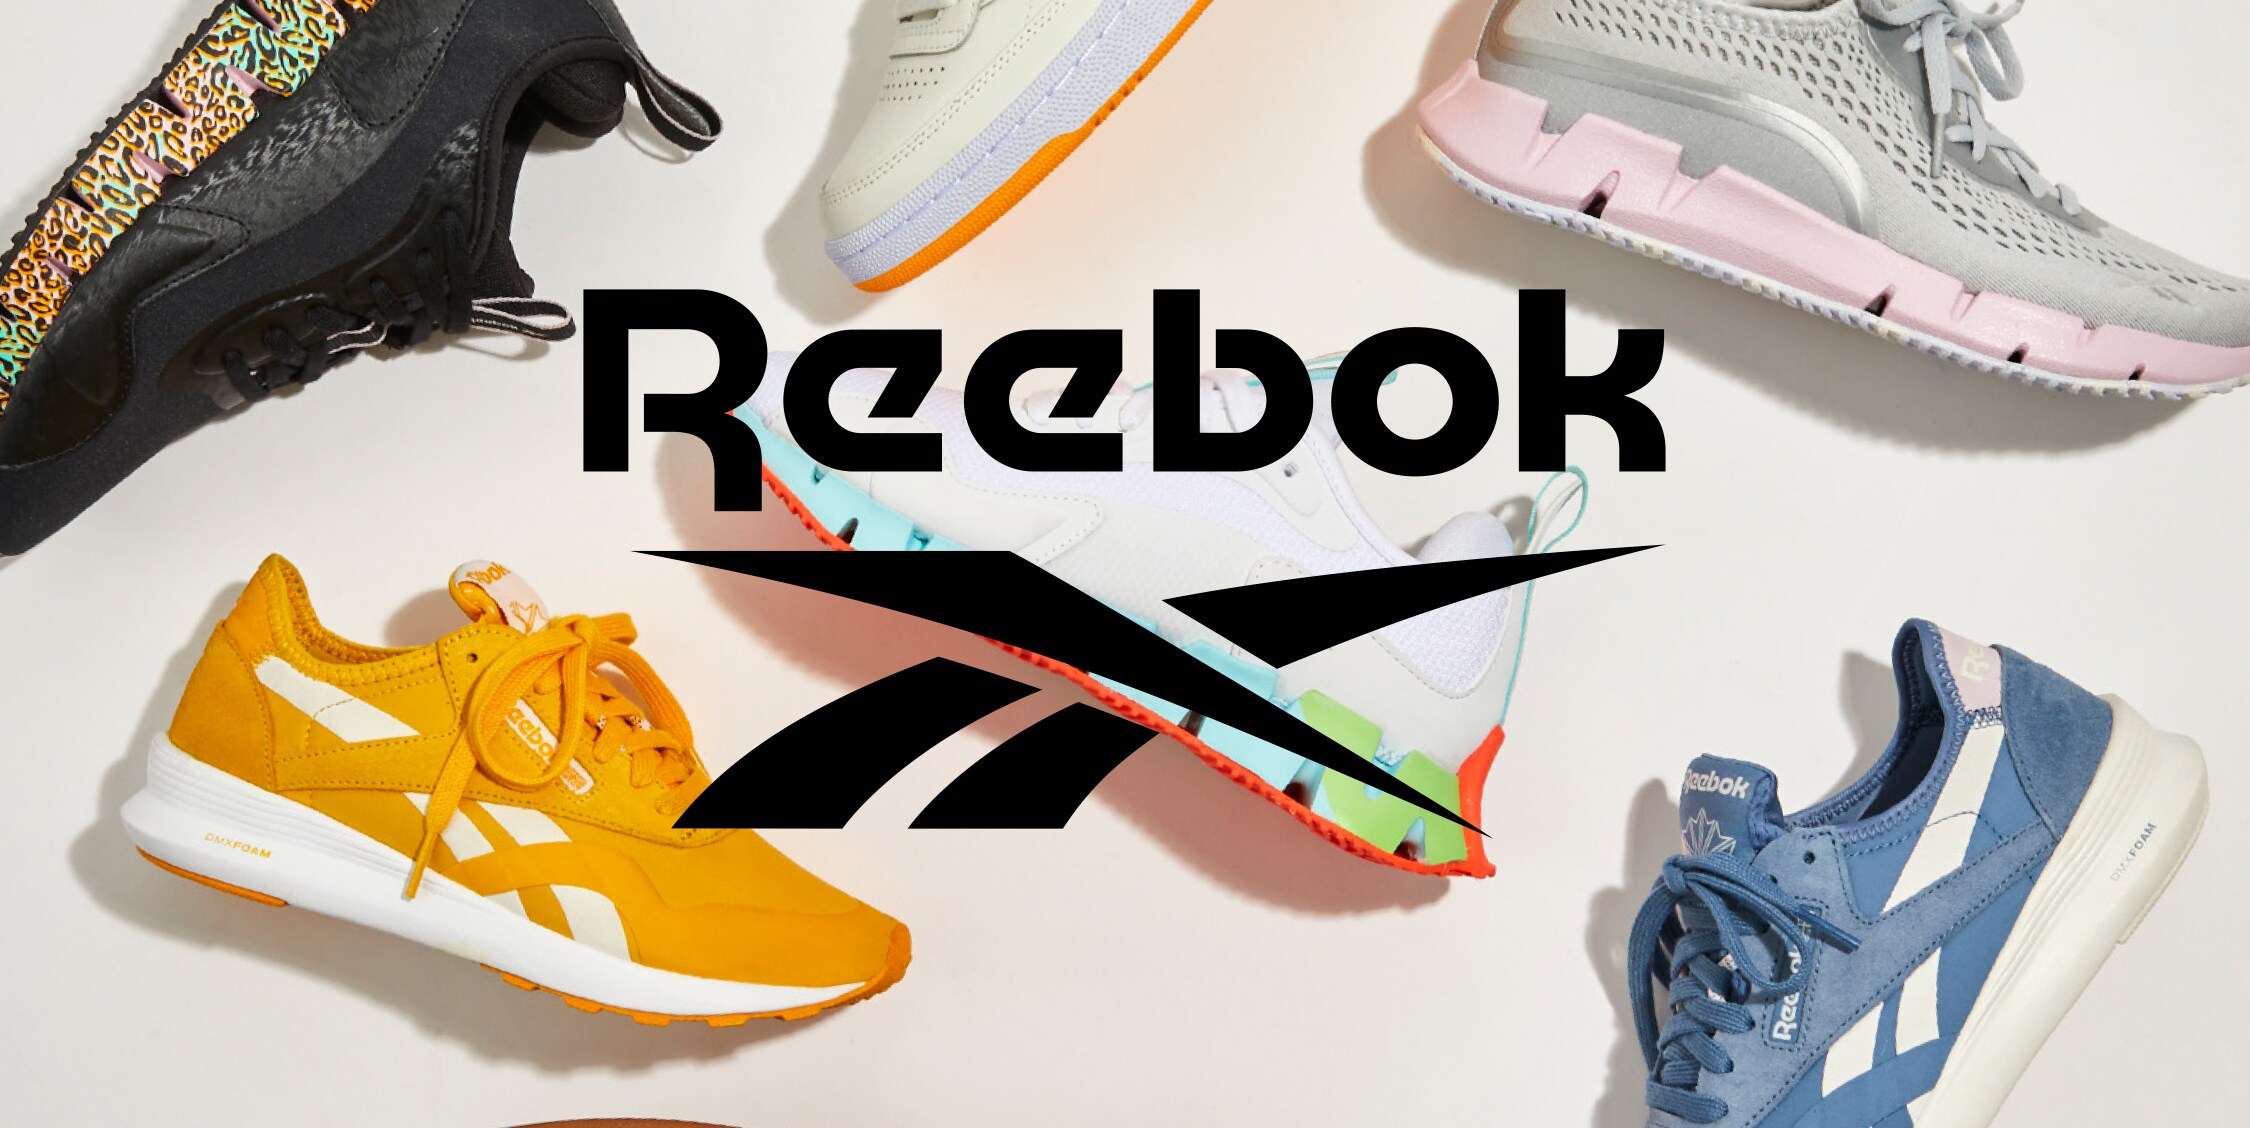 reebok colorful shoes